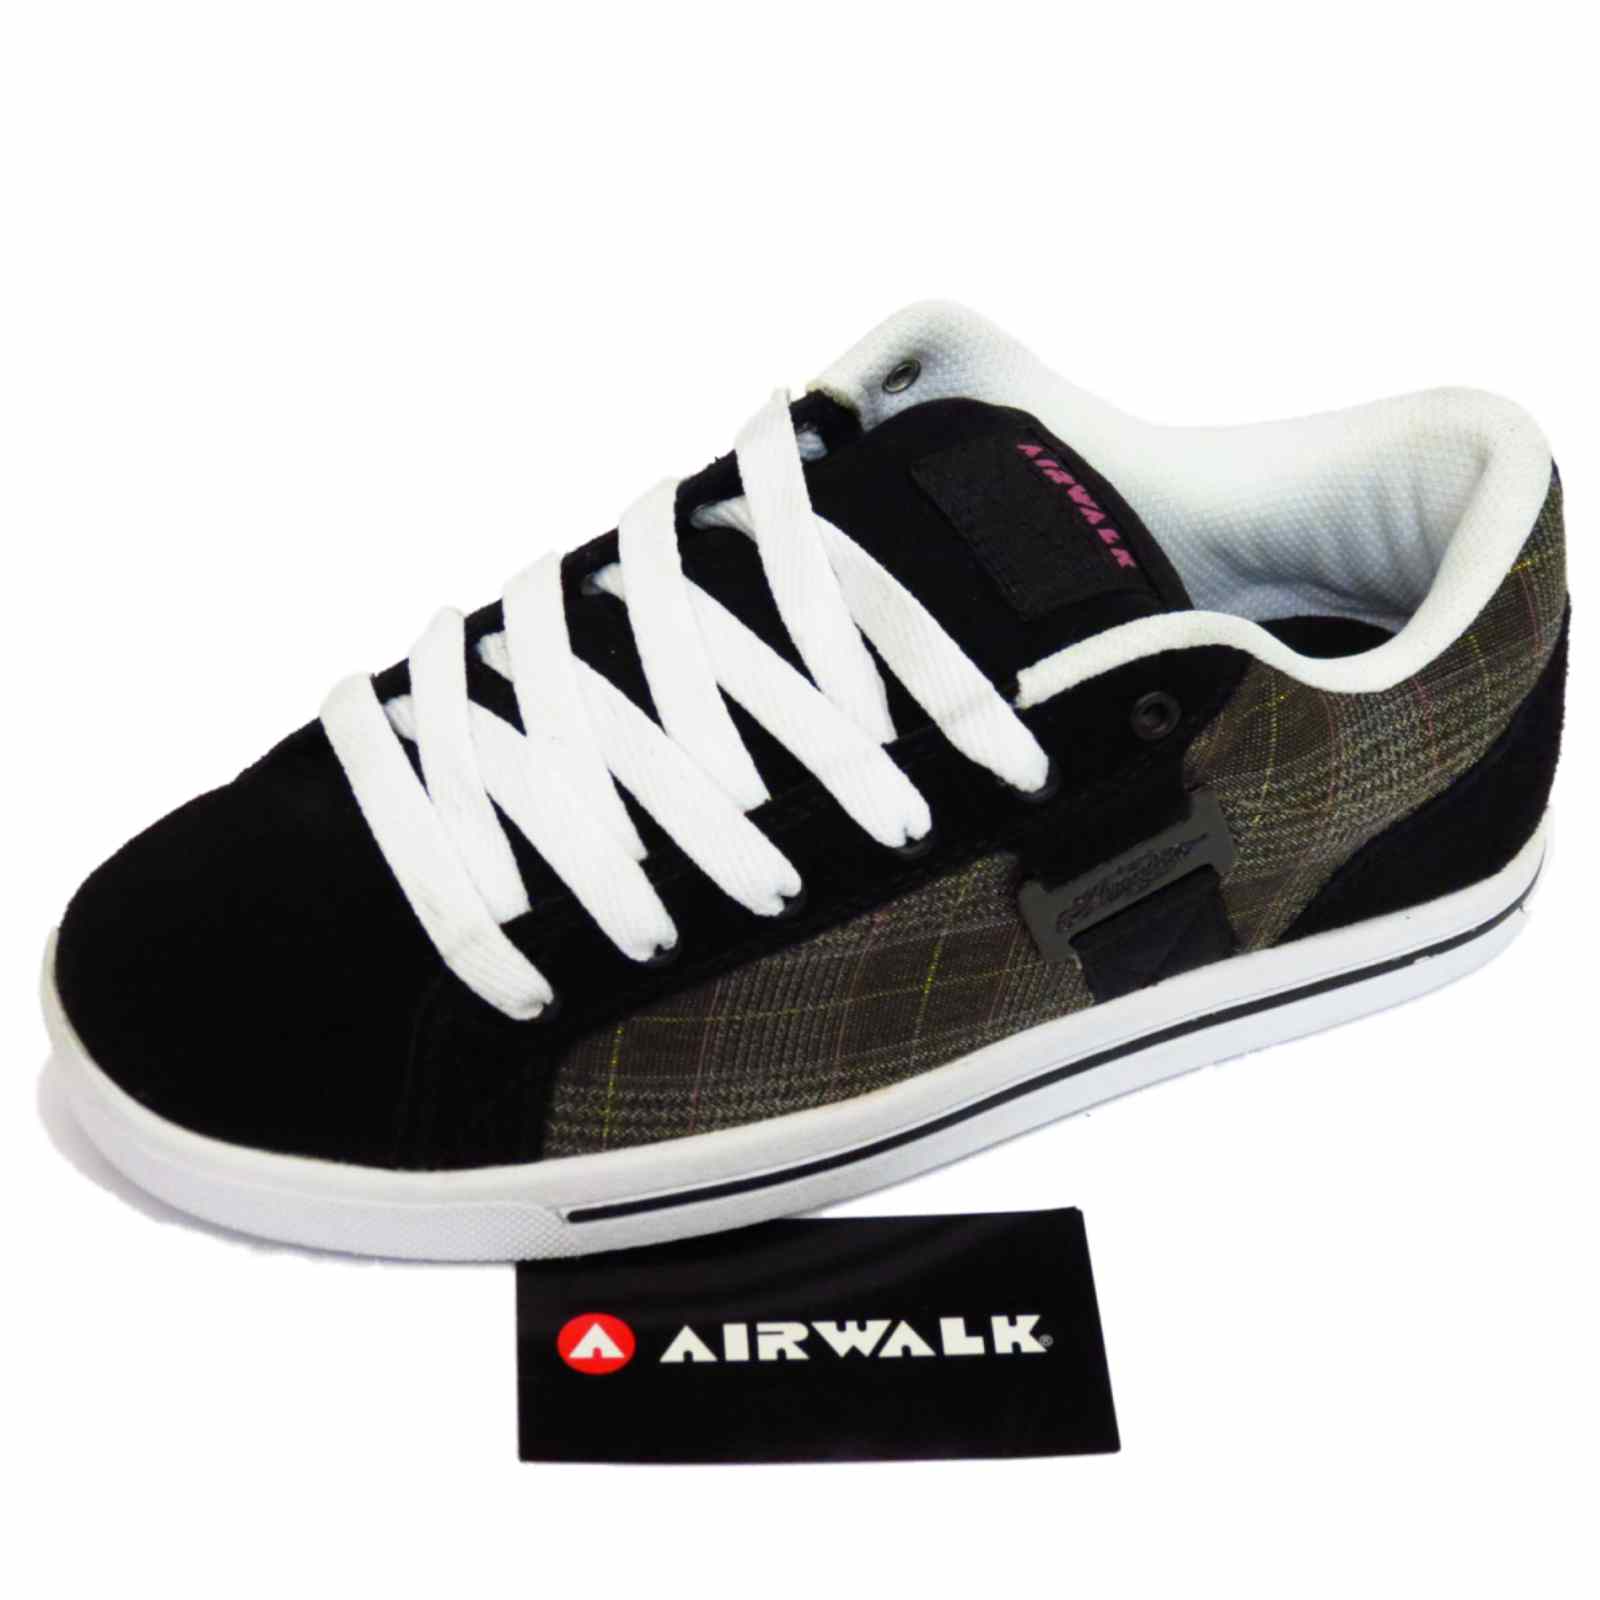 airwalk skate shoes